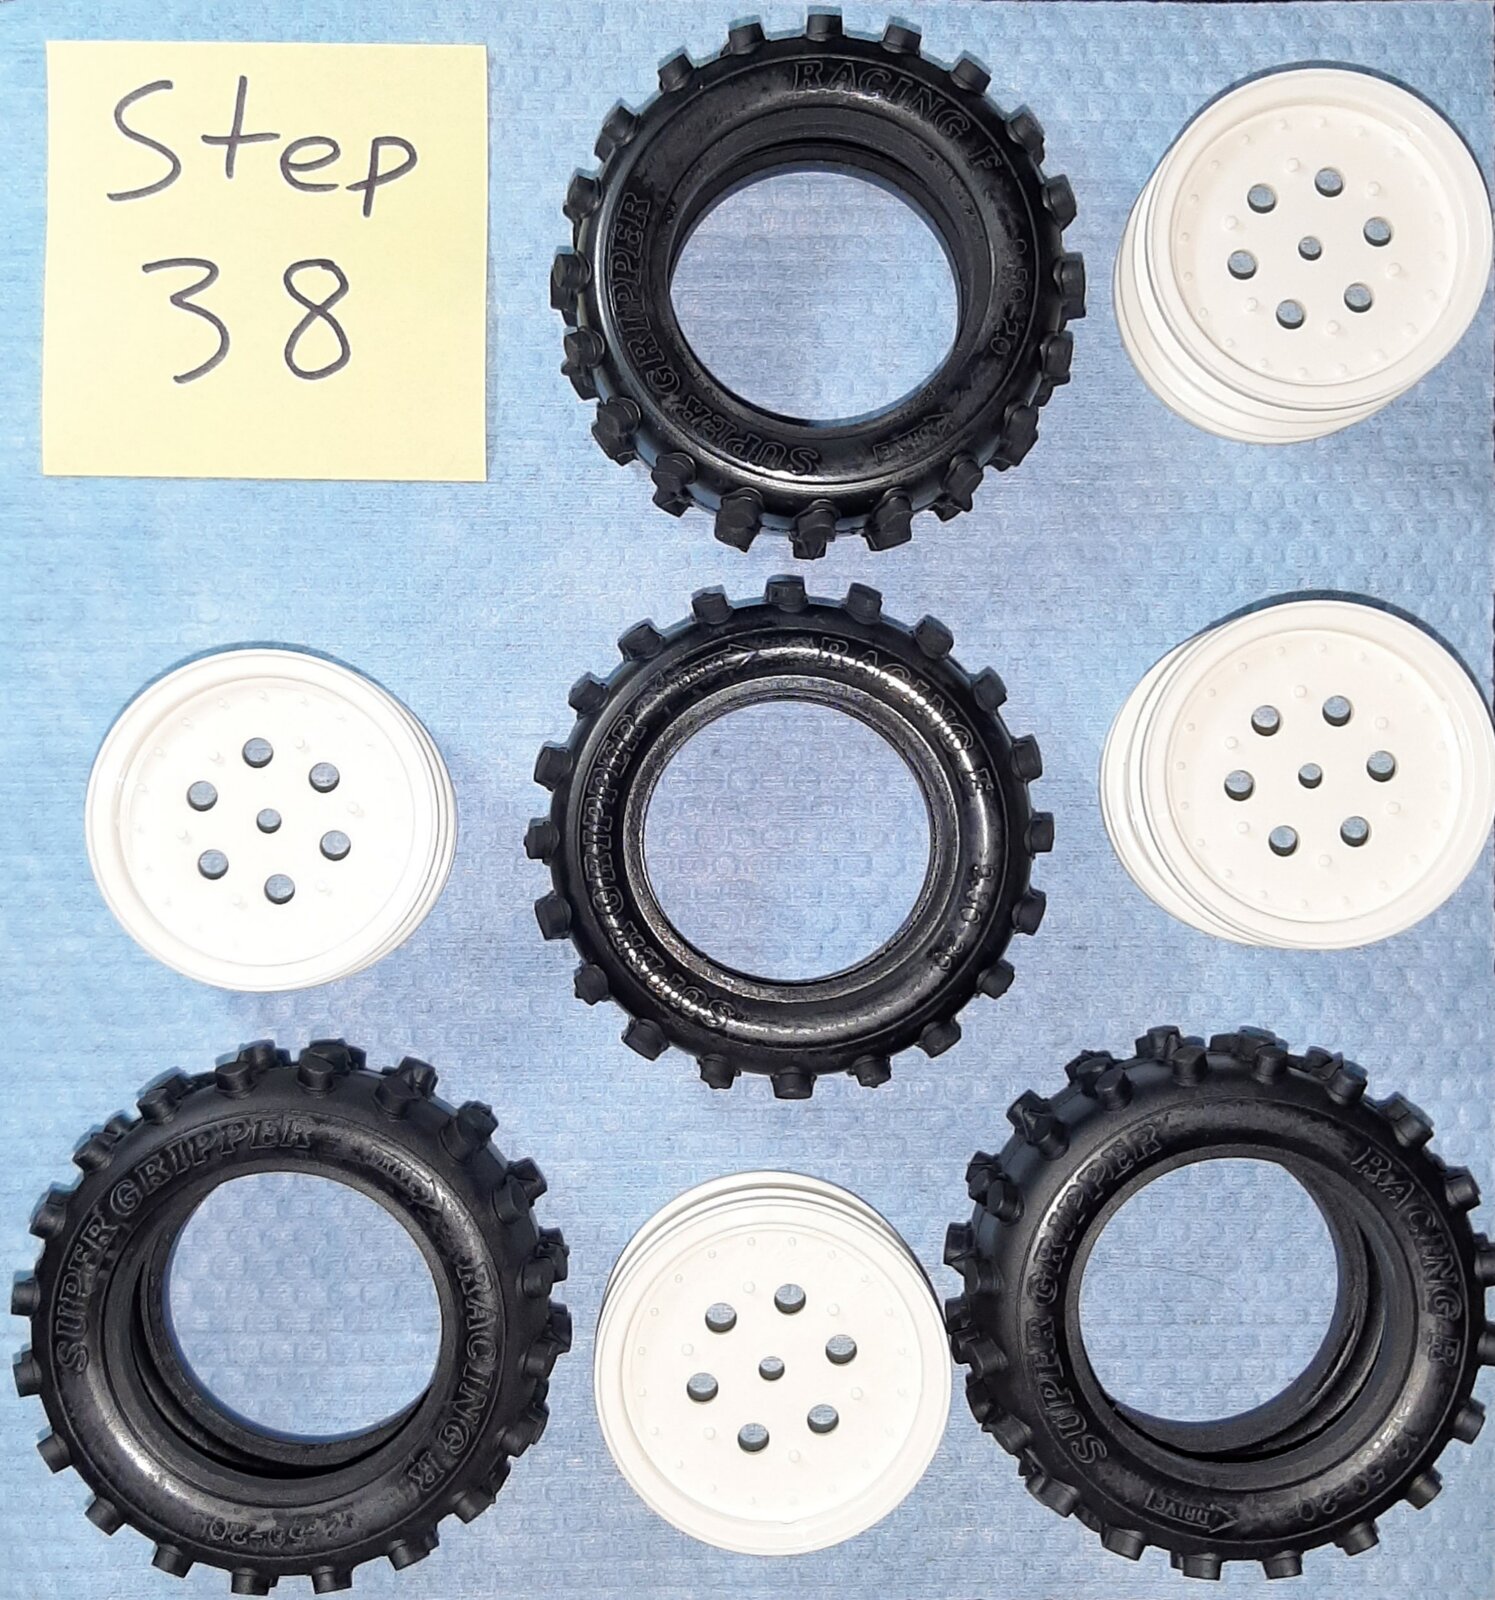 Step 38 Parts - Plastic rims.jpg